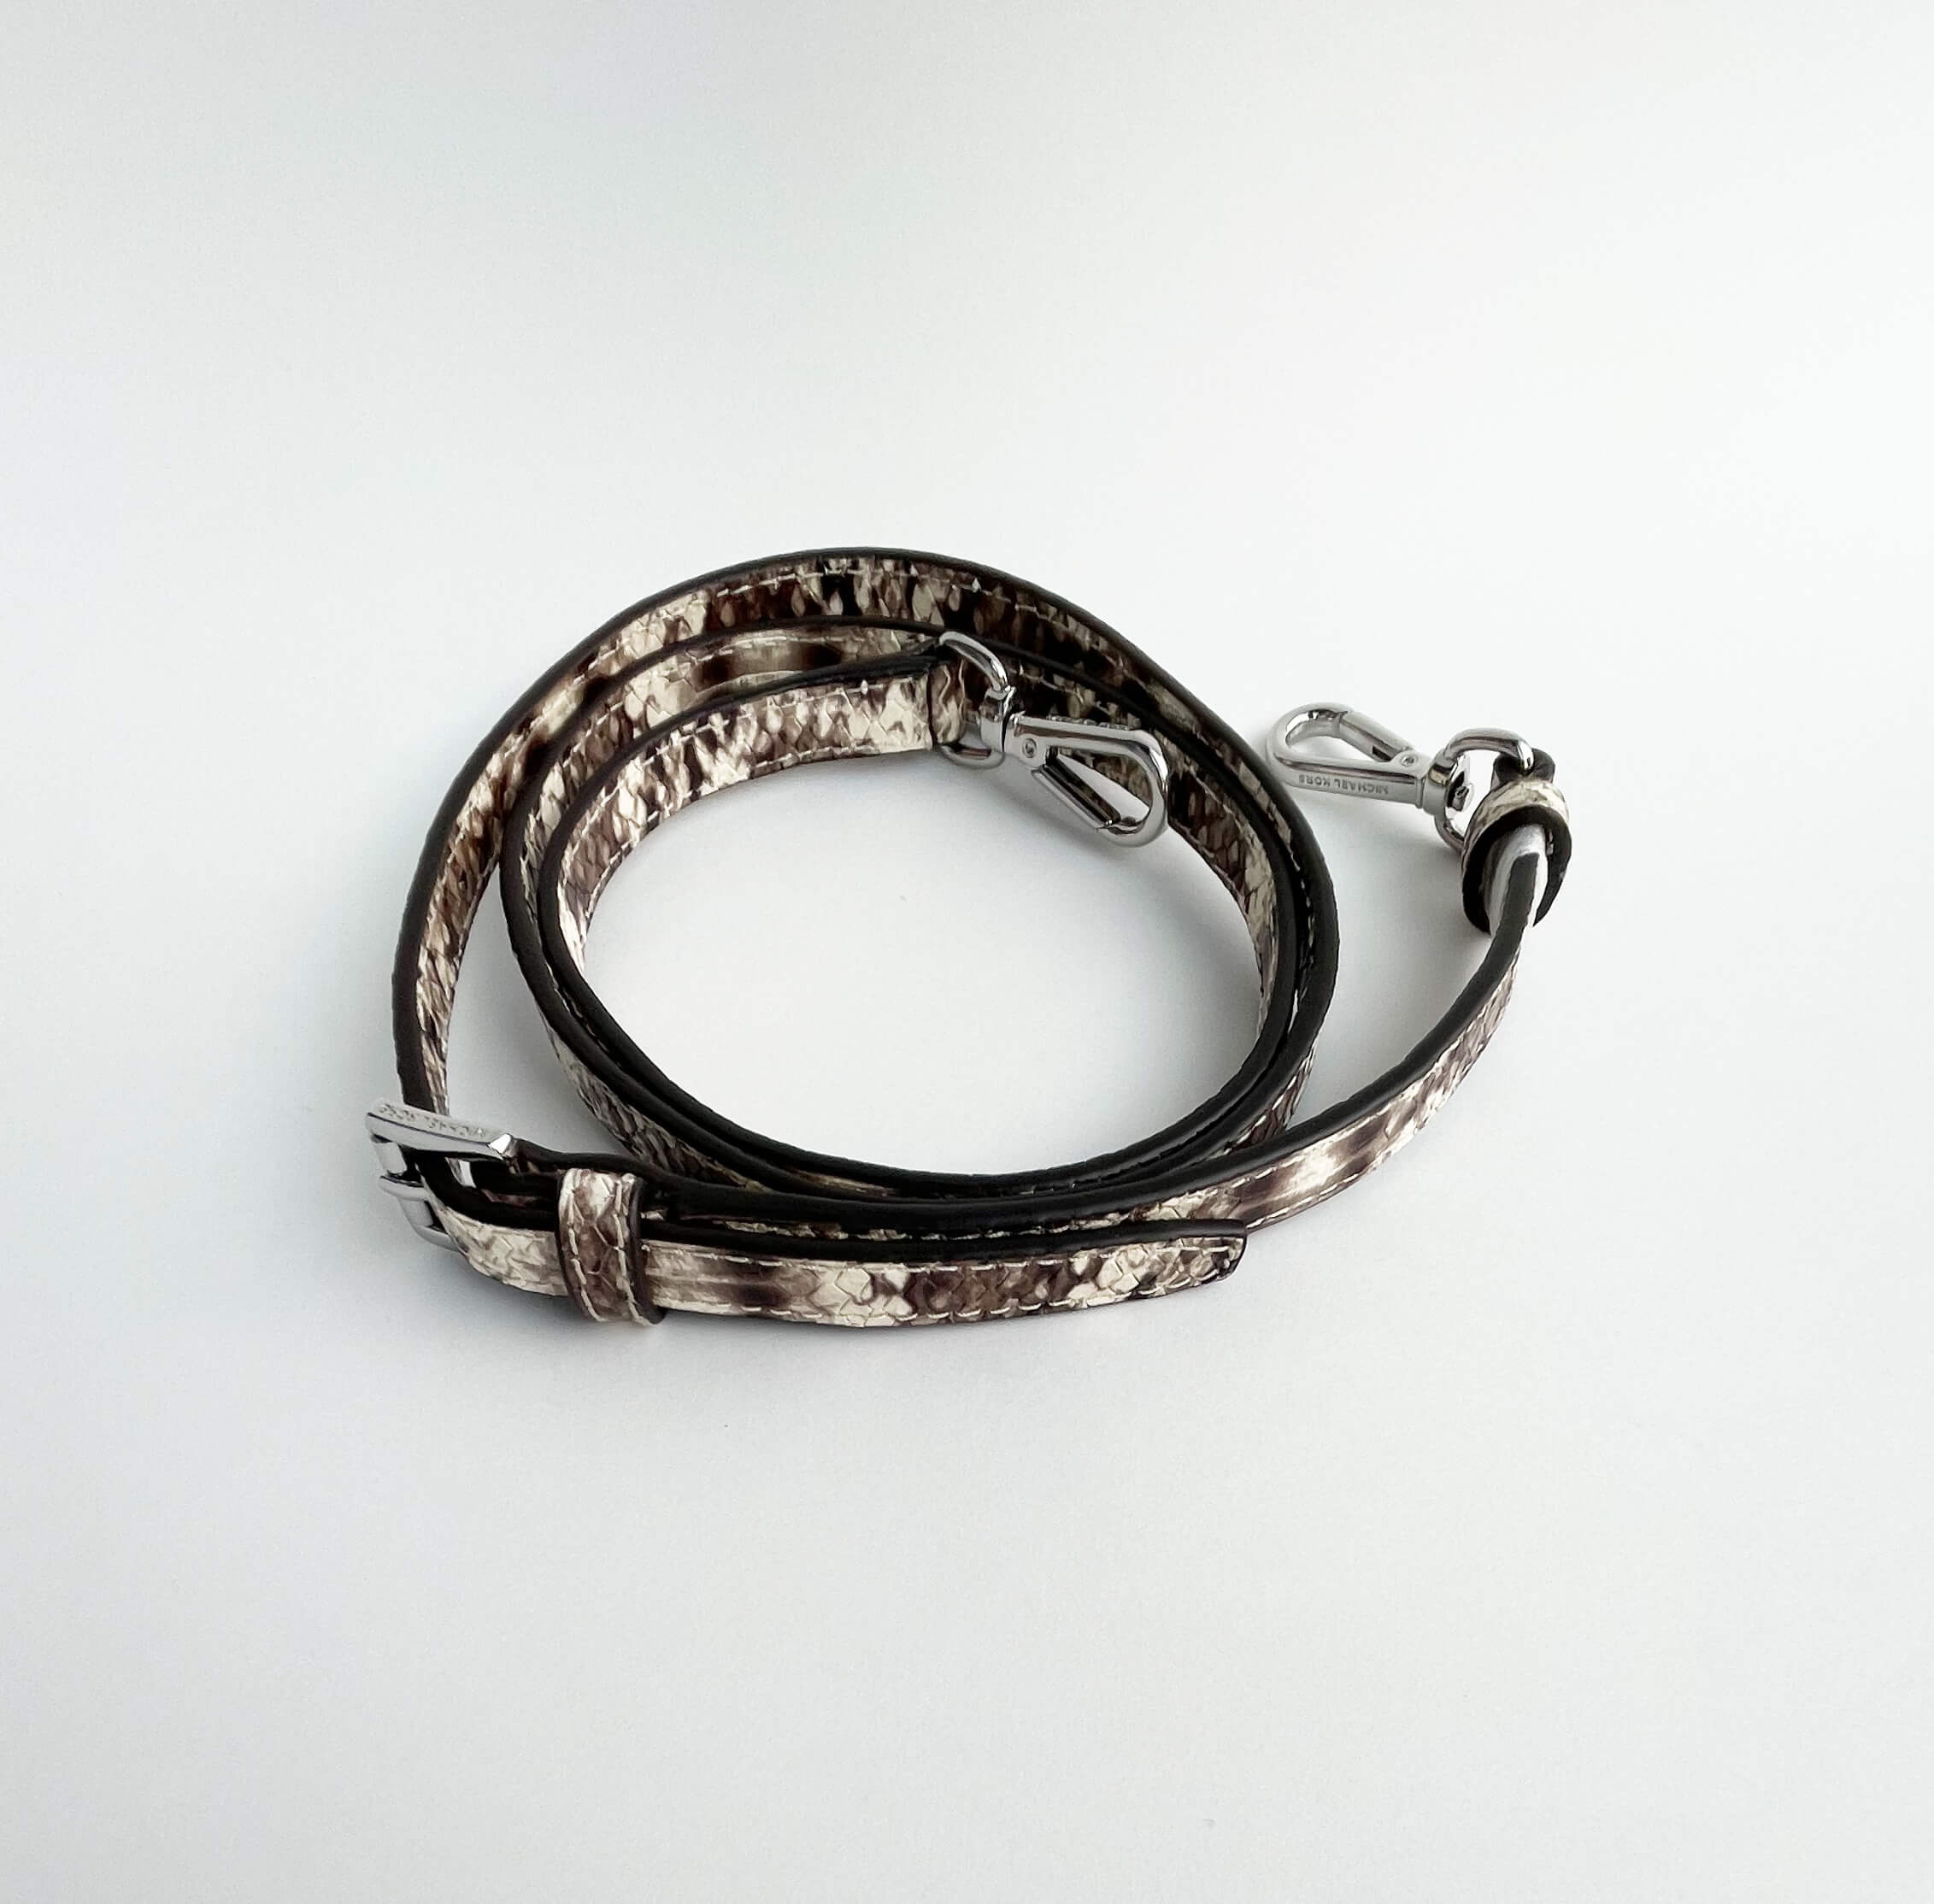 Michael Kors Daria Embossed Leather Clutch Bag Snake Print 10.5” X